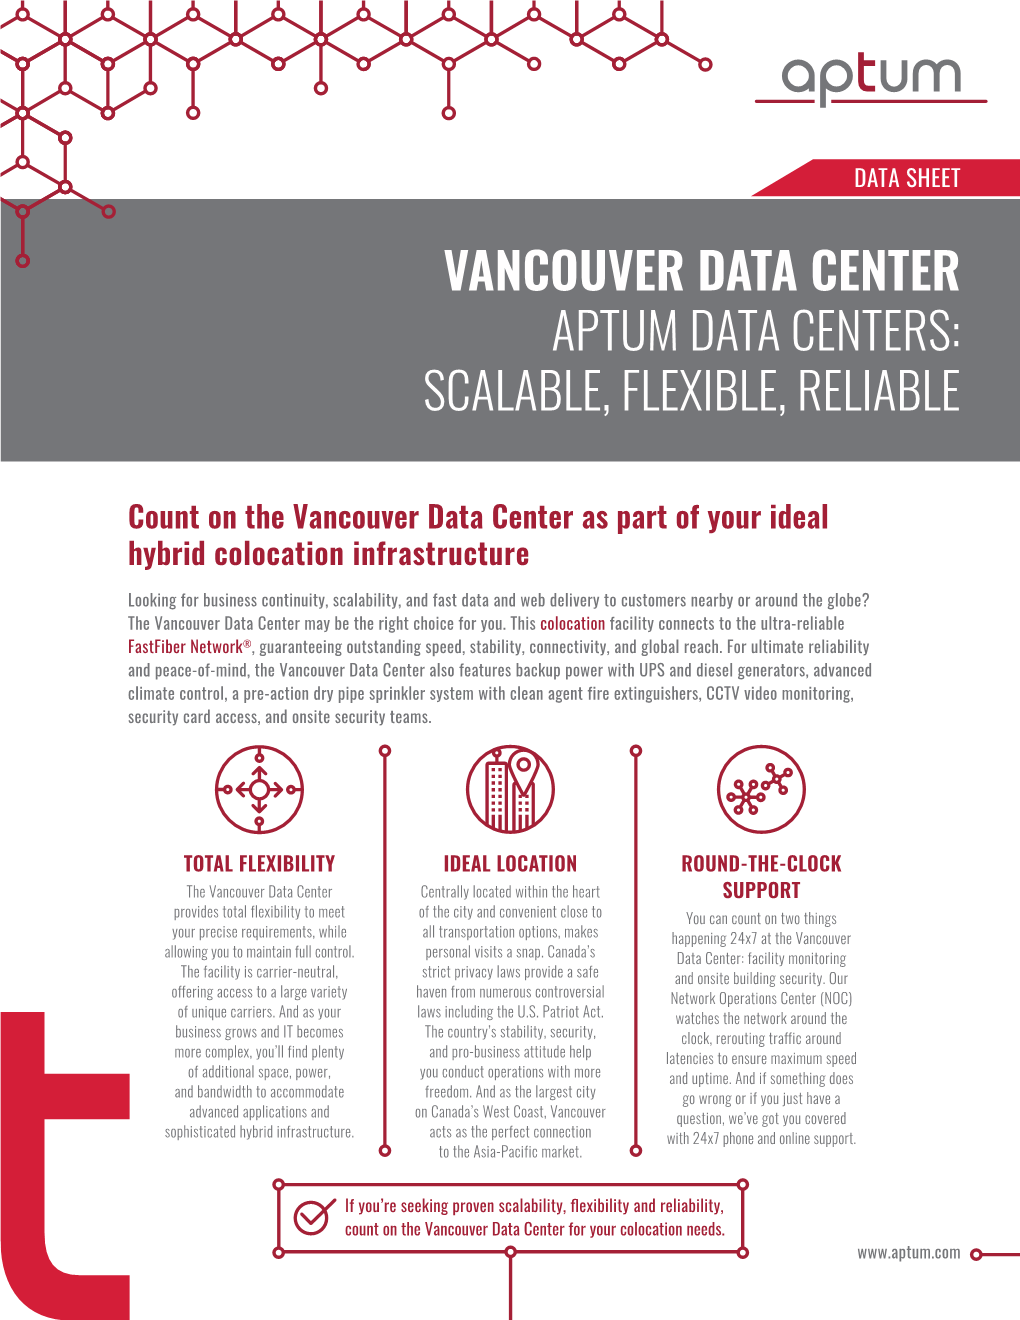 Vancouver Data Center Aptum Data Centers: Scalable, Flexible, Reliable